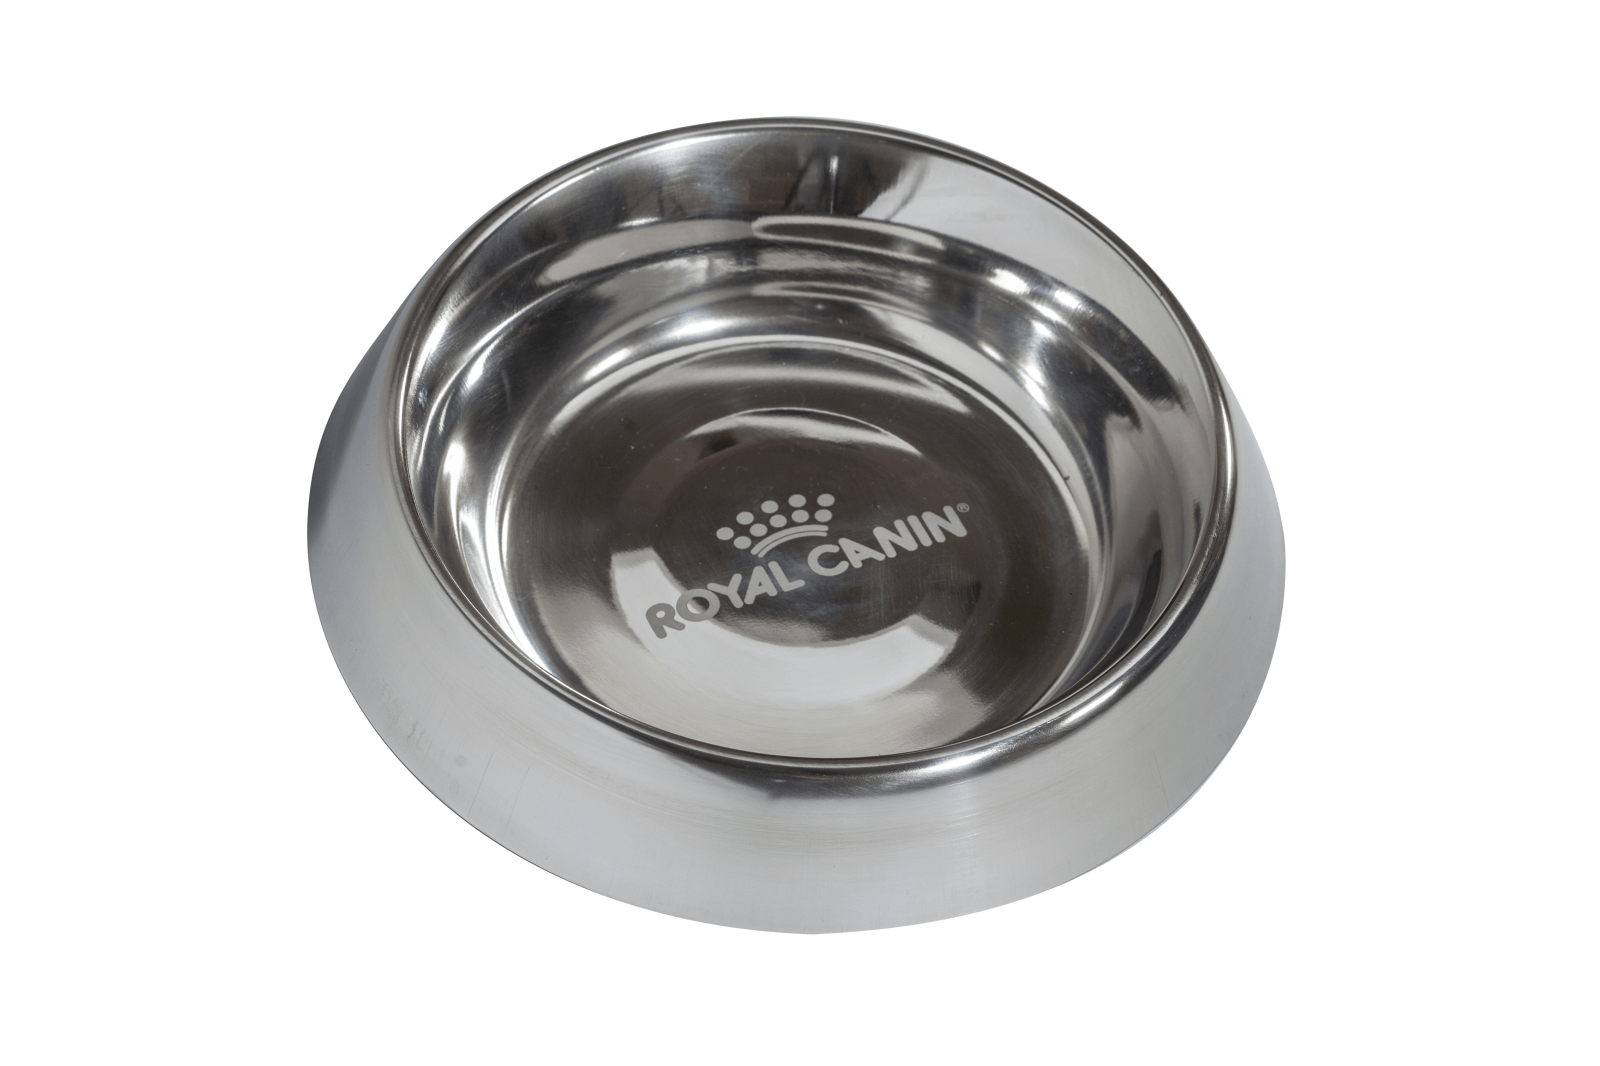 PROMO Castron Medium Royal Canin